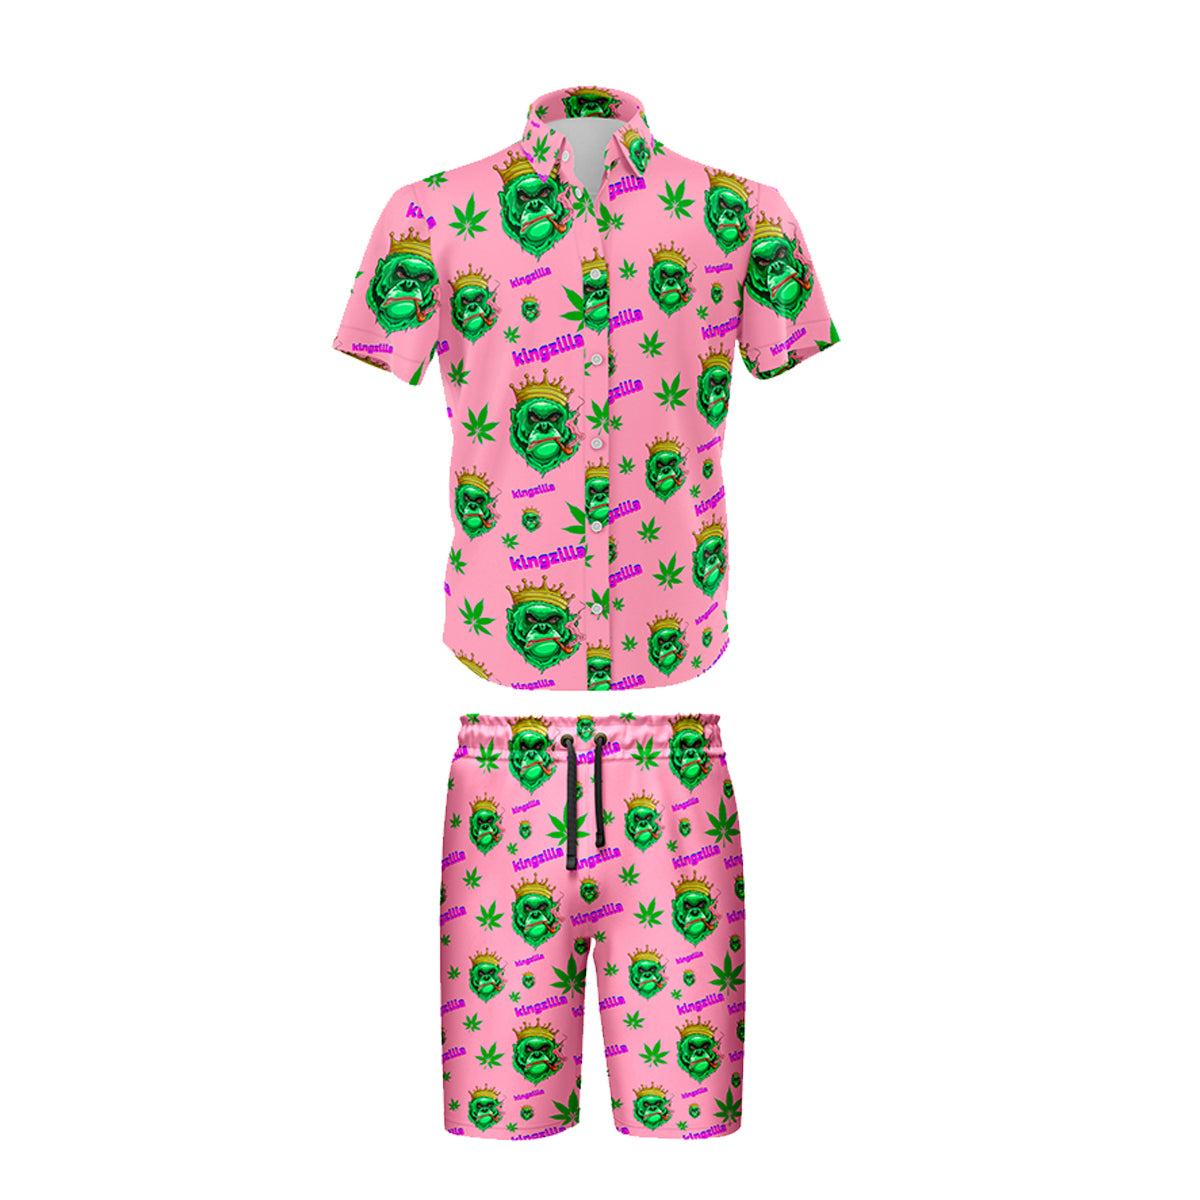 Kingzilla Leaf Pink Shirt and Short Set, Pack of 5 Sizes Sets, 1-M, 1-L, 1-XL, 1-XXL, 1-XXXL